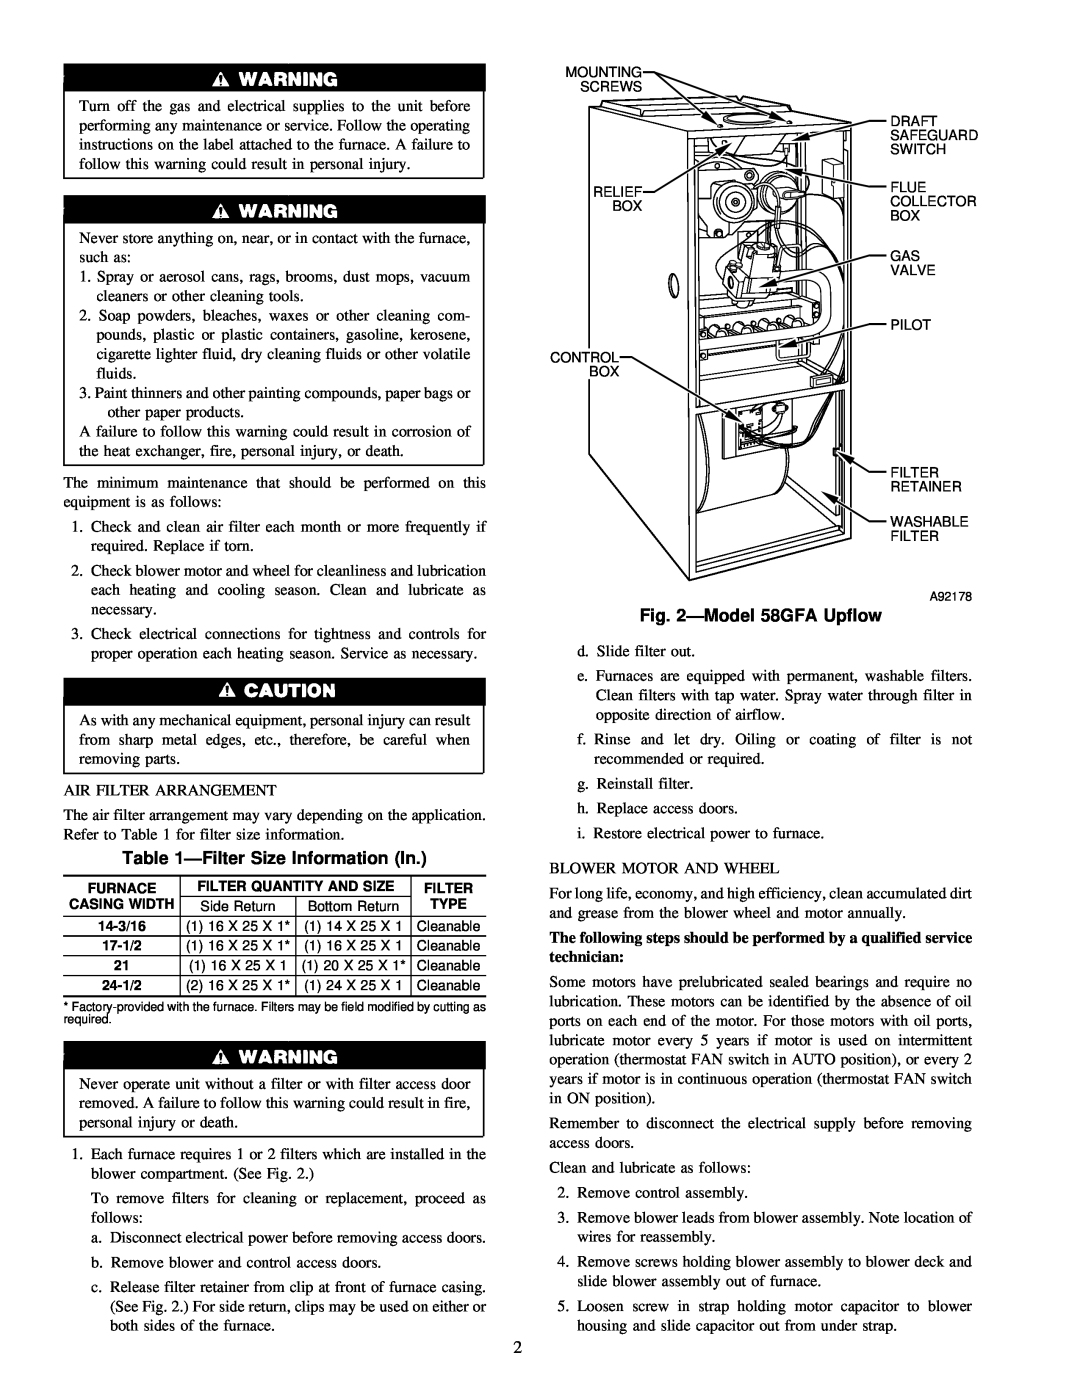 Carrier instruction manual ÐFilter Size Information In, ÐModel 58GFA Upflow 